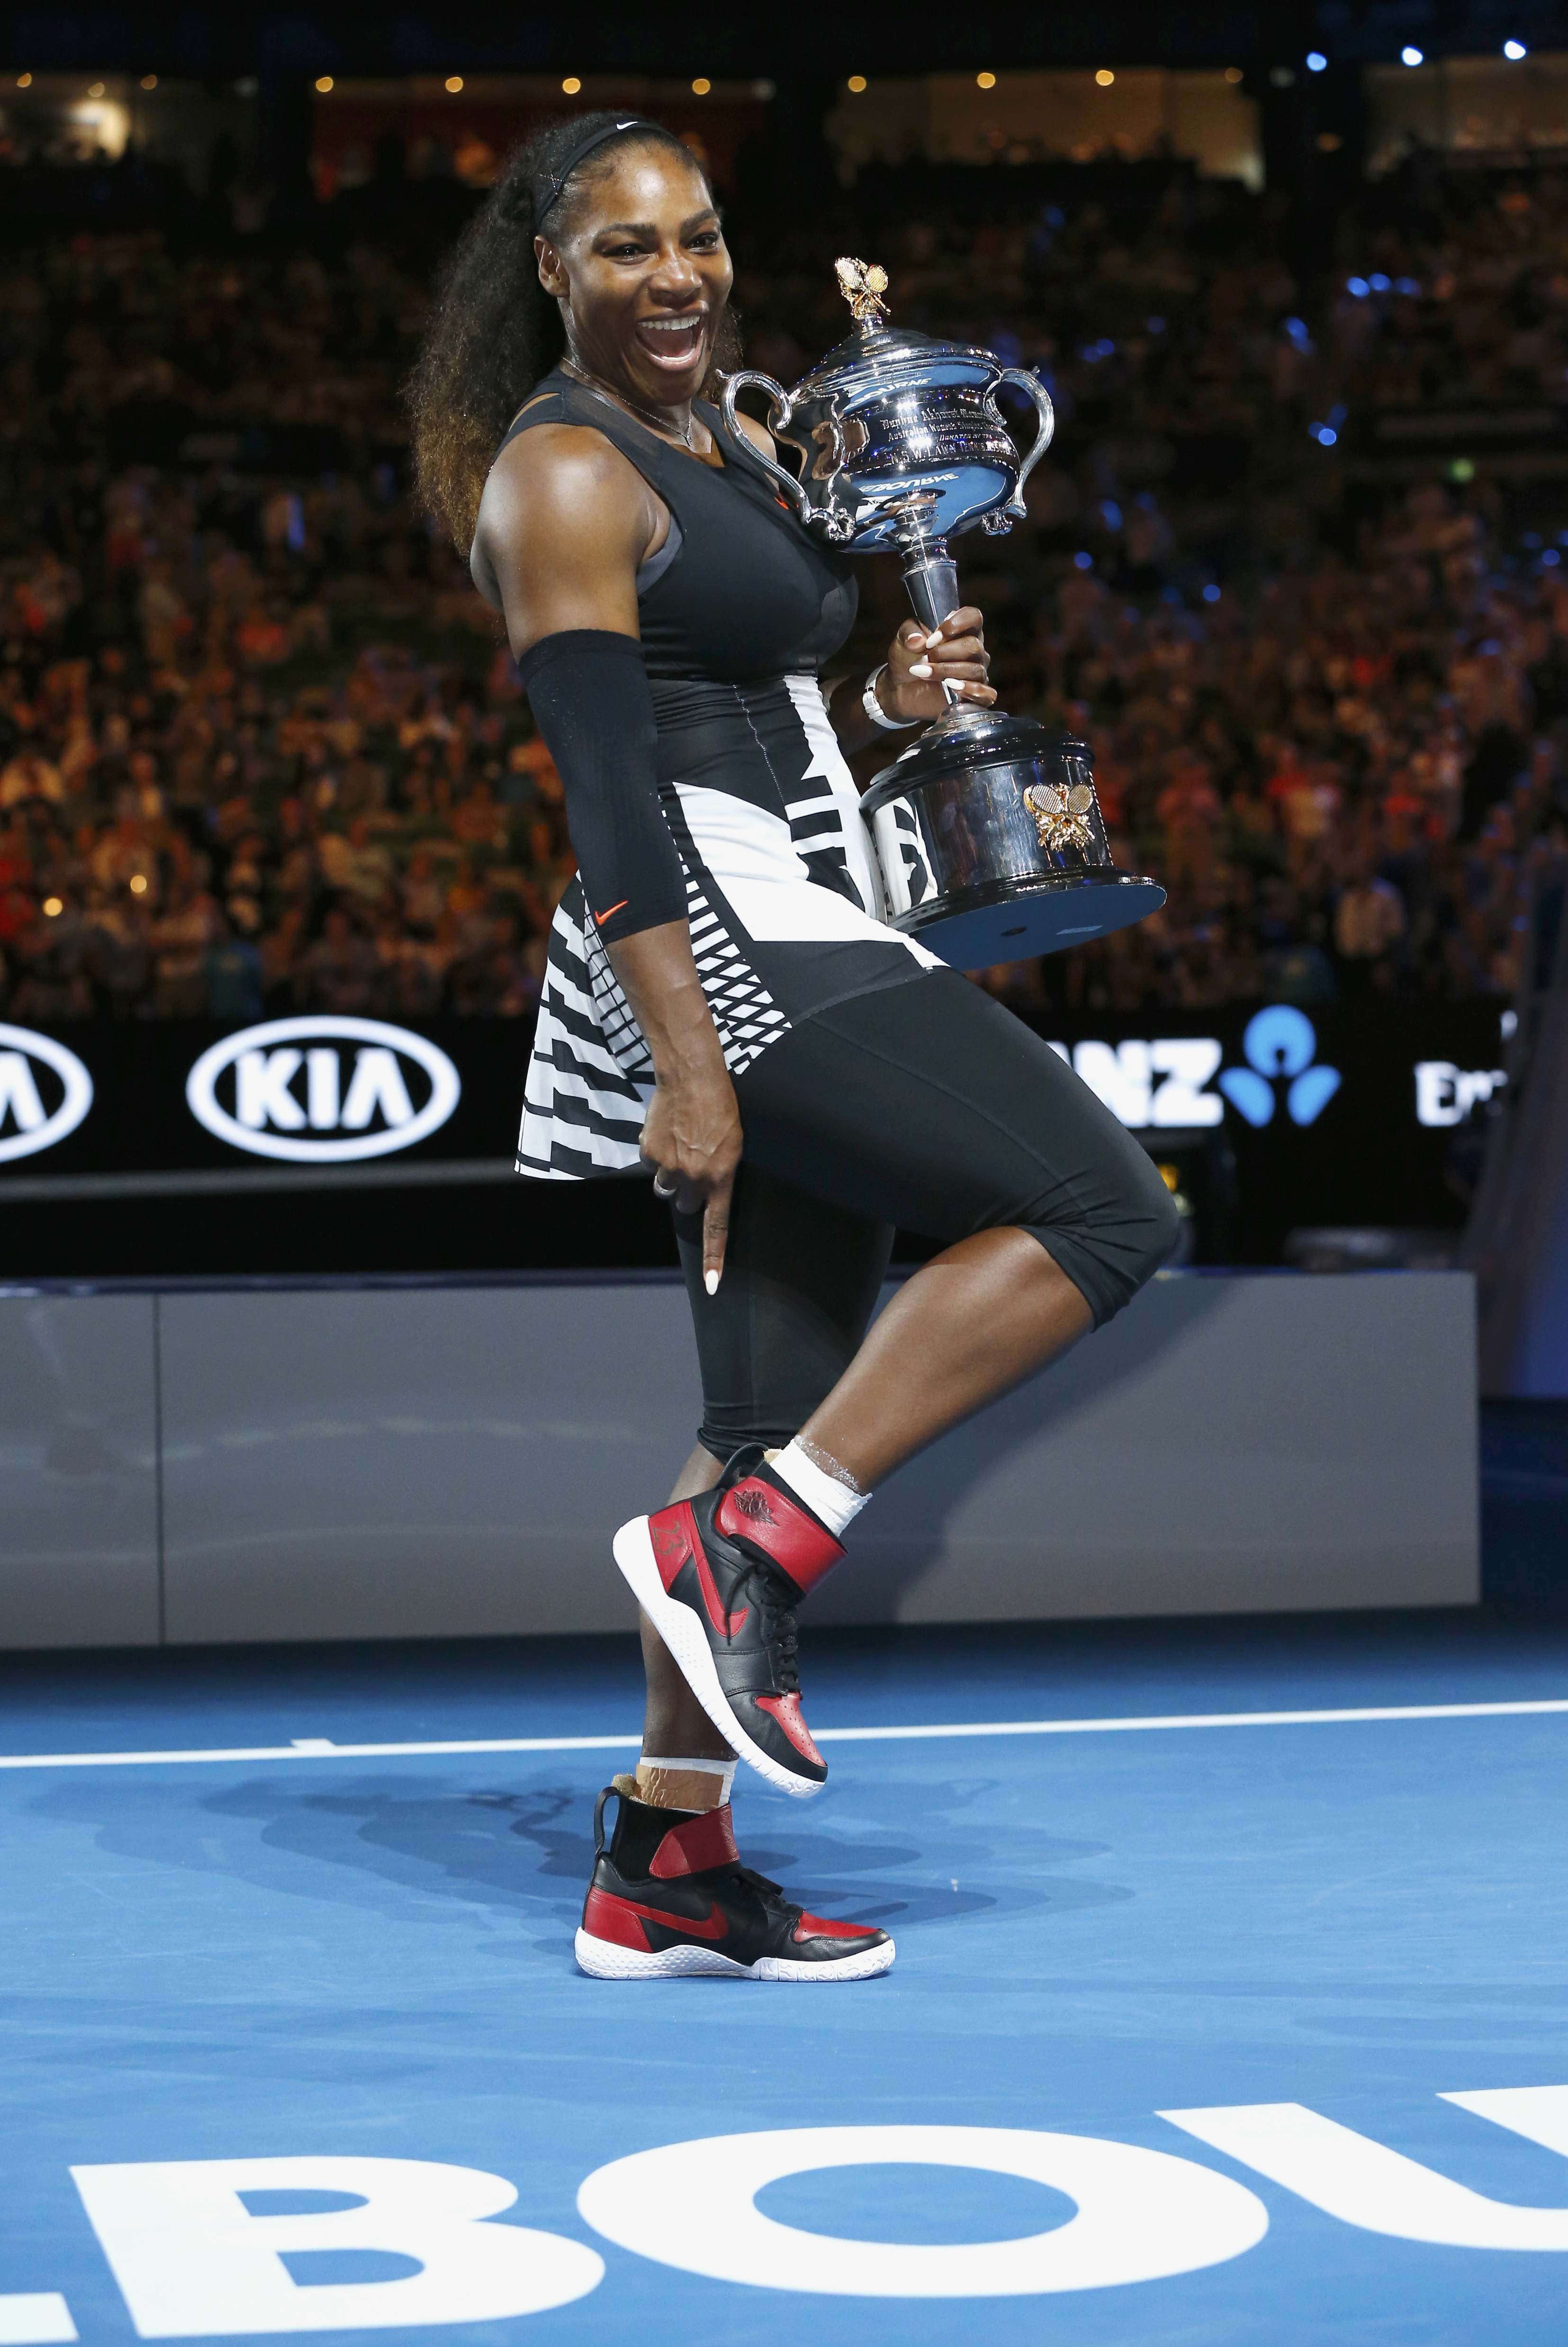 Tennis: Serena wins 23rd Grand Slam crown